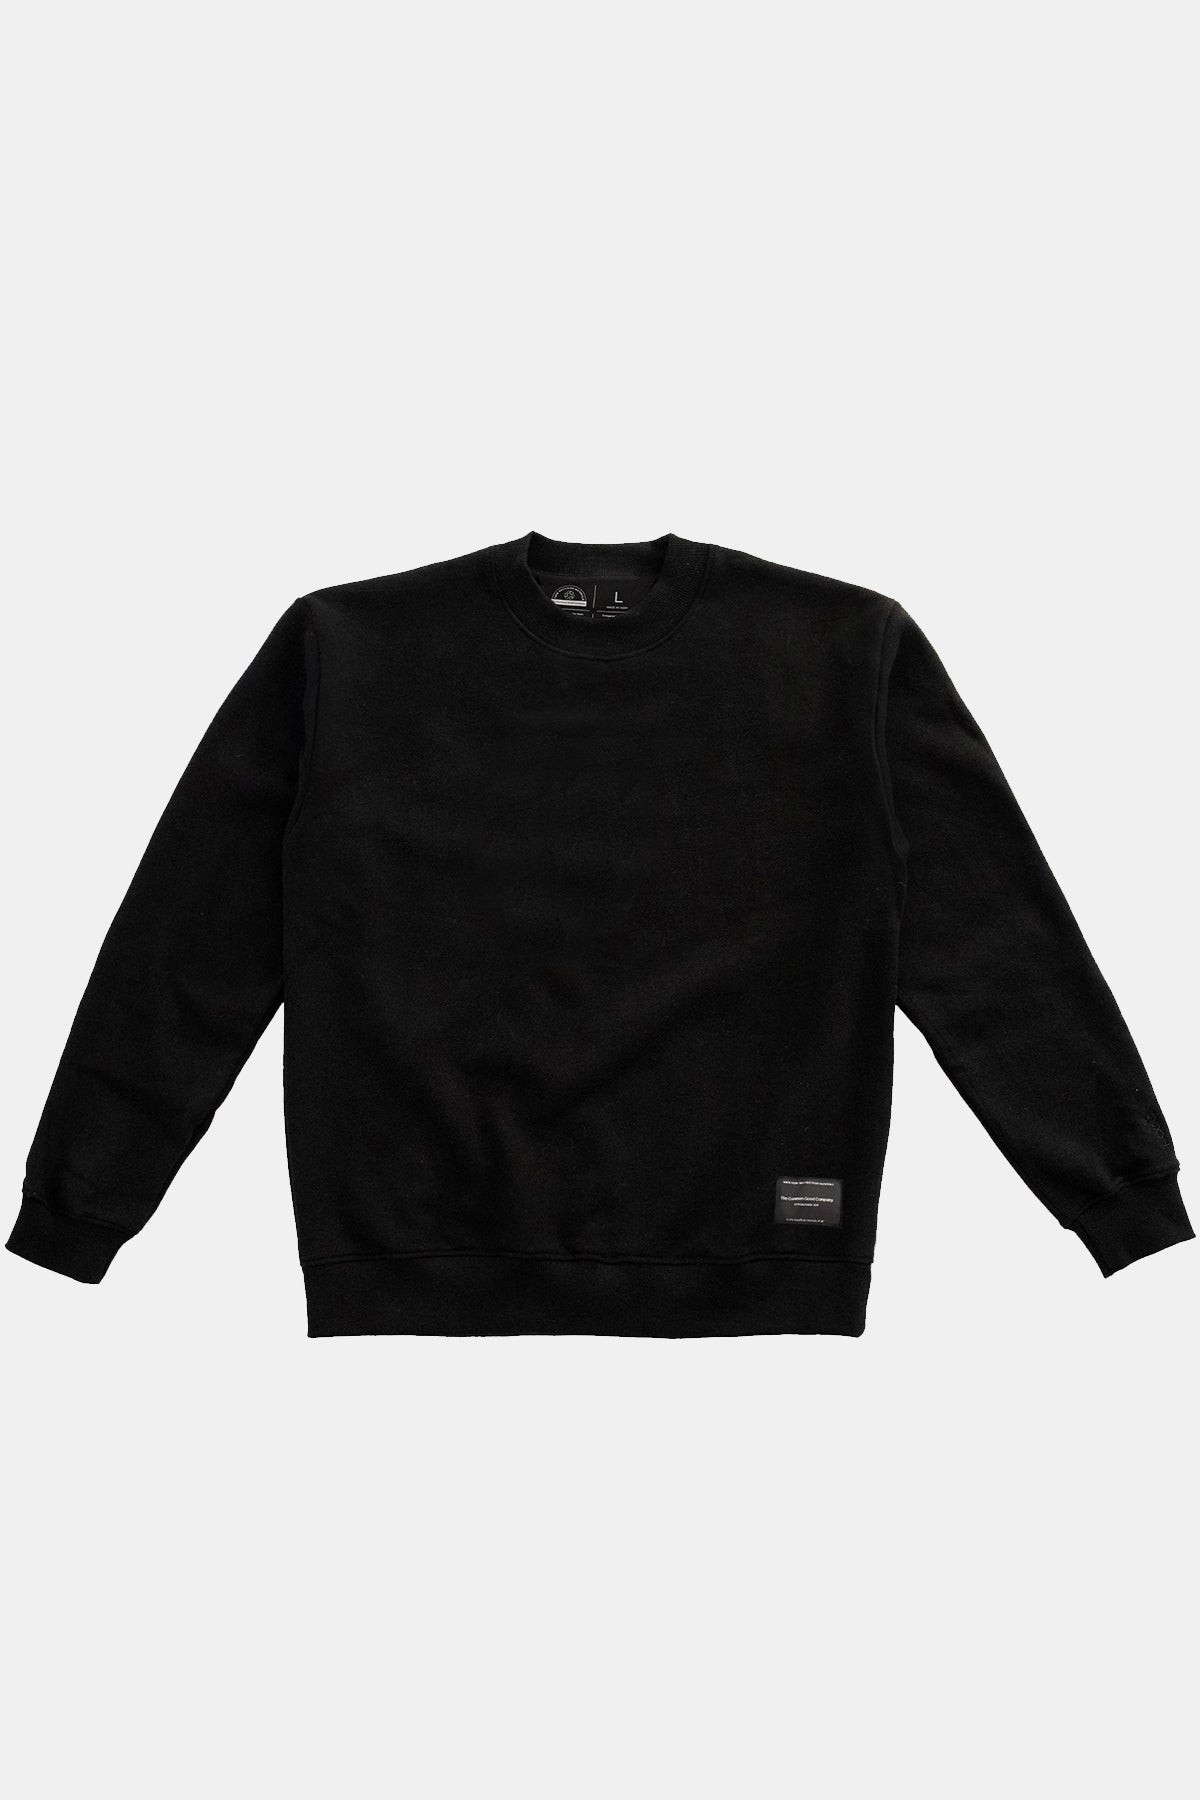 Plain Dane Black Box Fit Sweater - Patch Adams